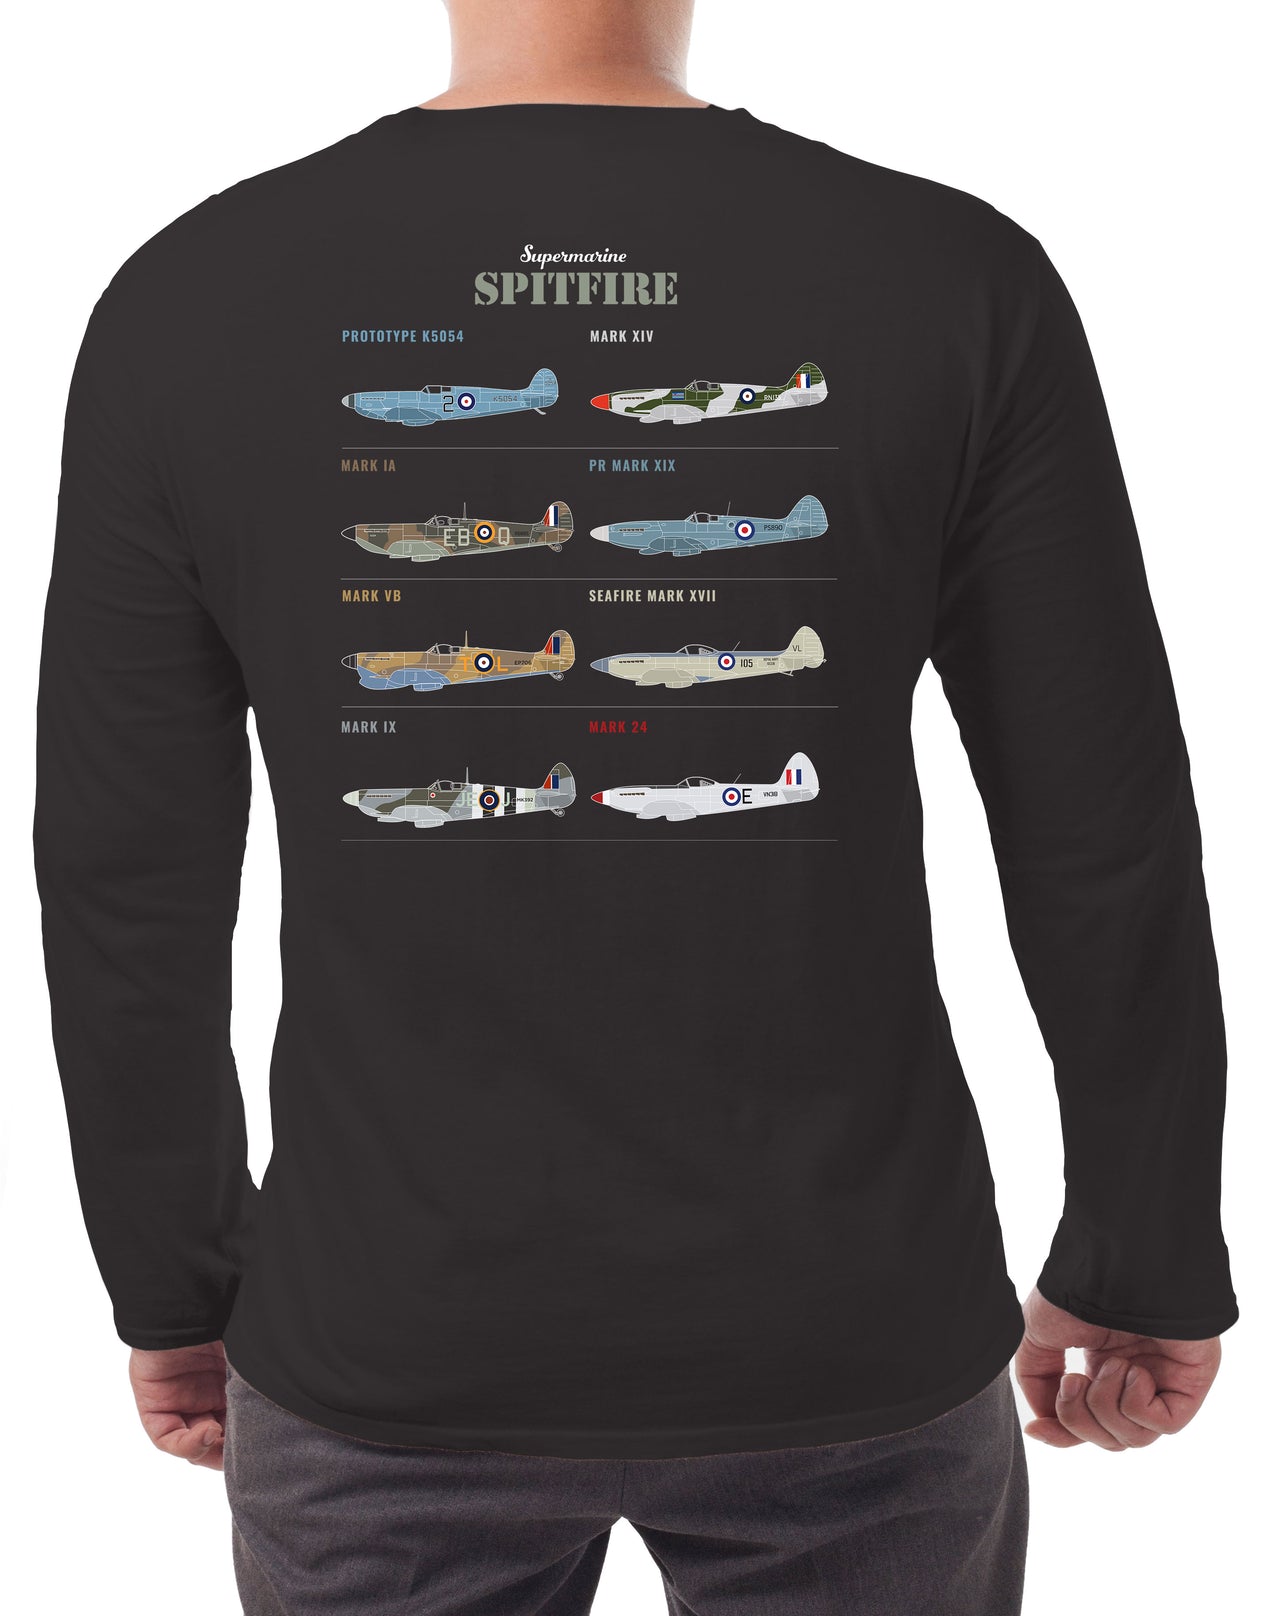 Spitfire Prototype K5054 - Long-sleeve T-shirt